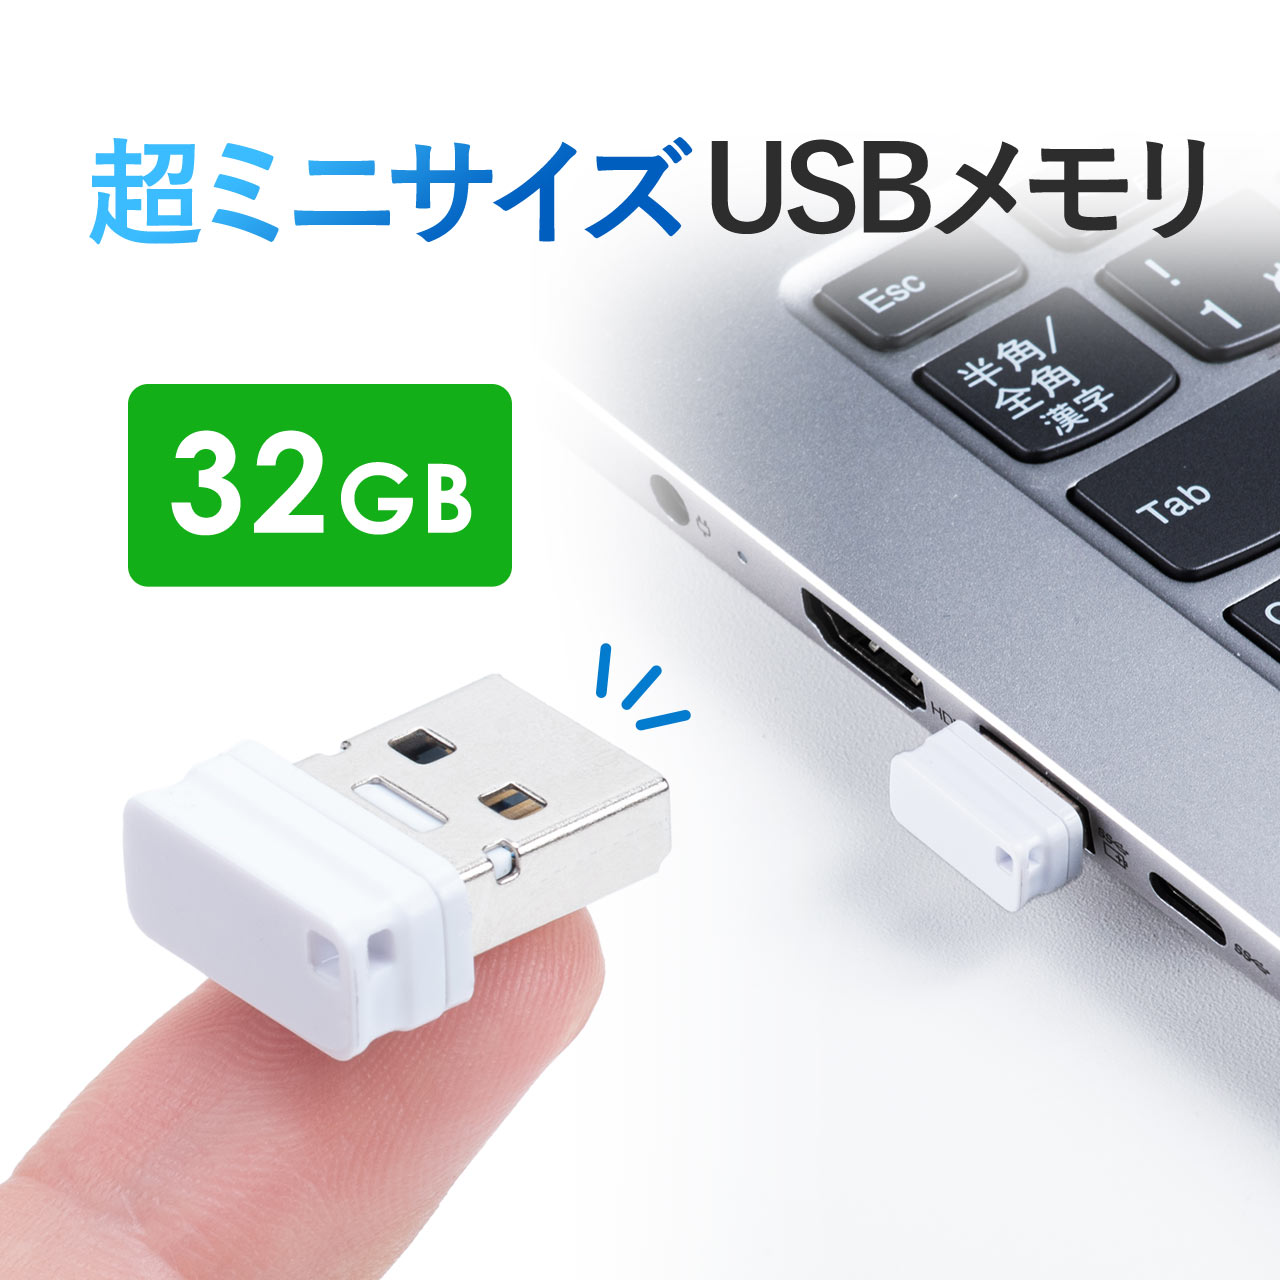 USB ^ f[^] Lbv 32GB USB3.2 Gen1 zCg